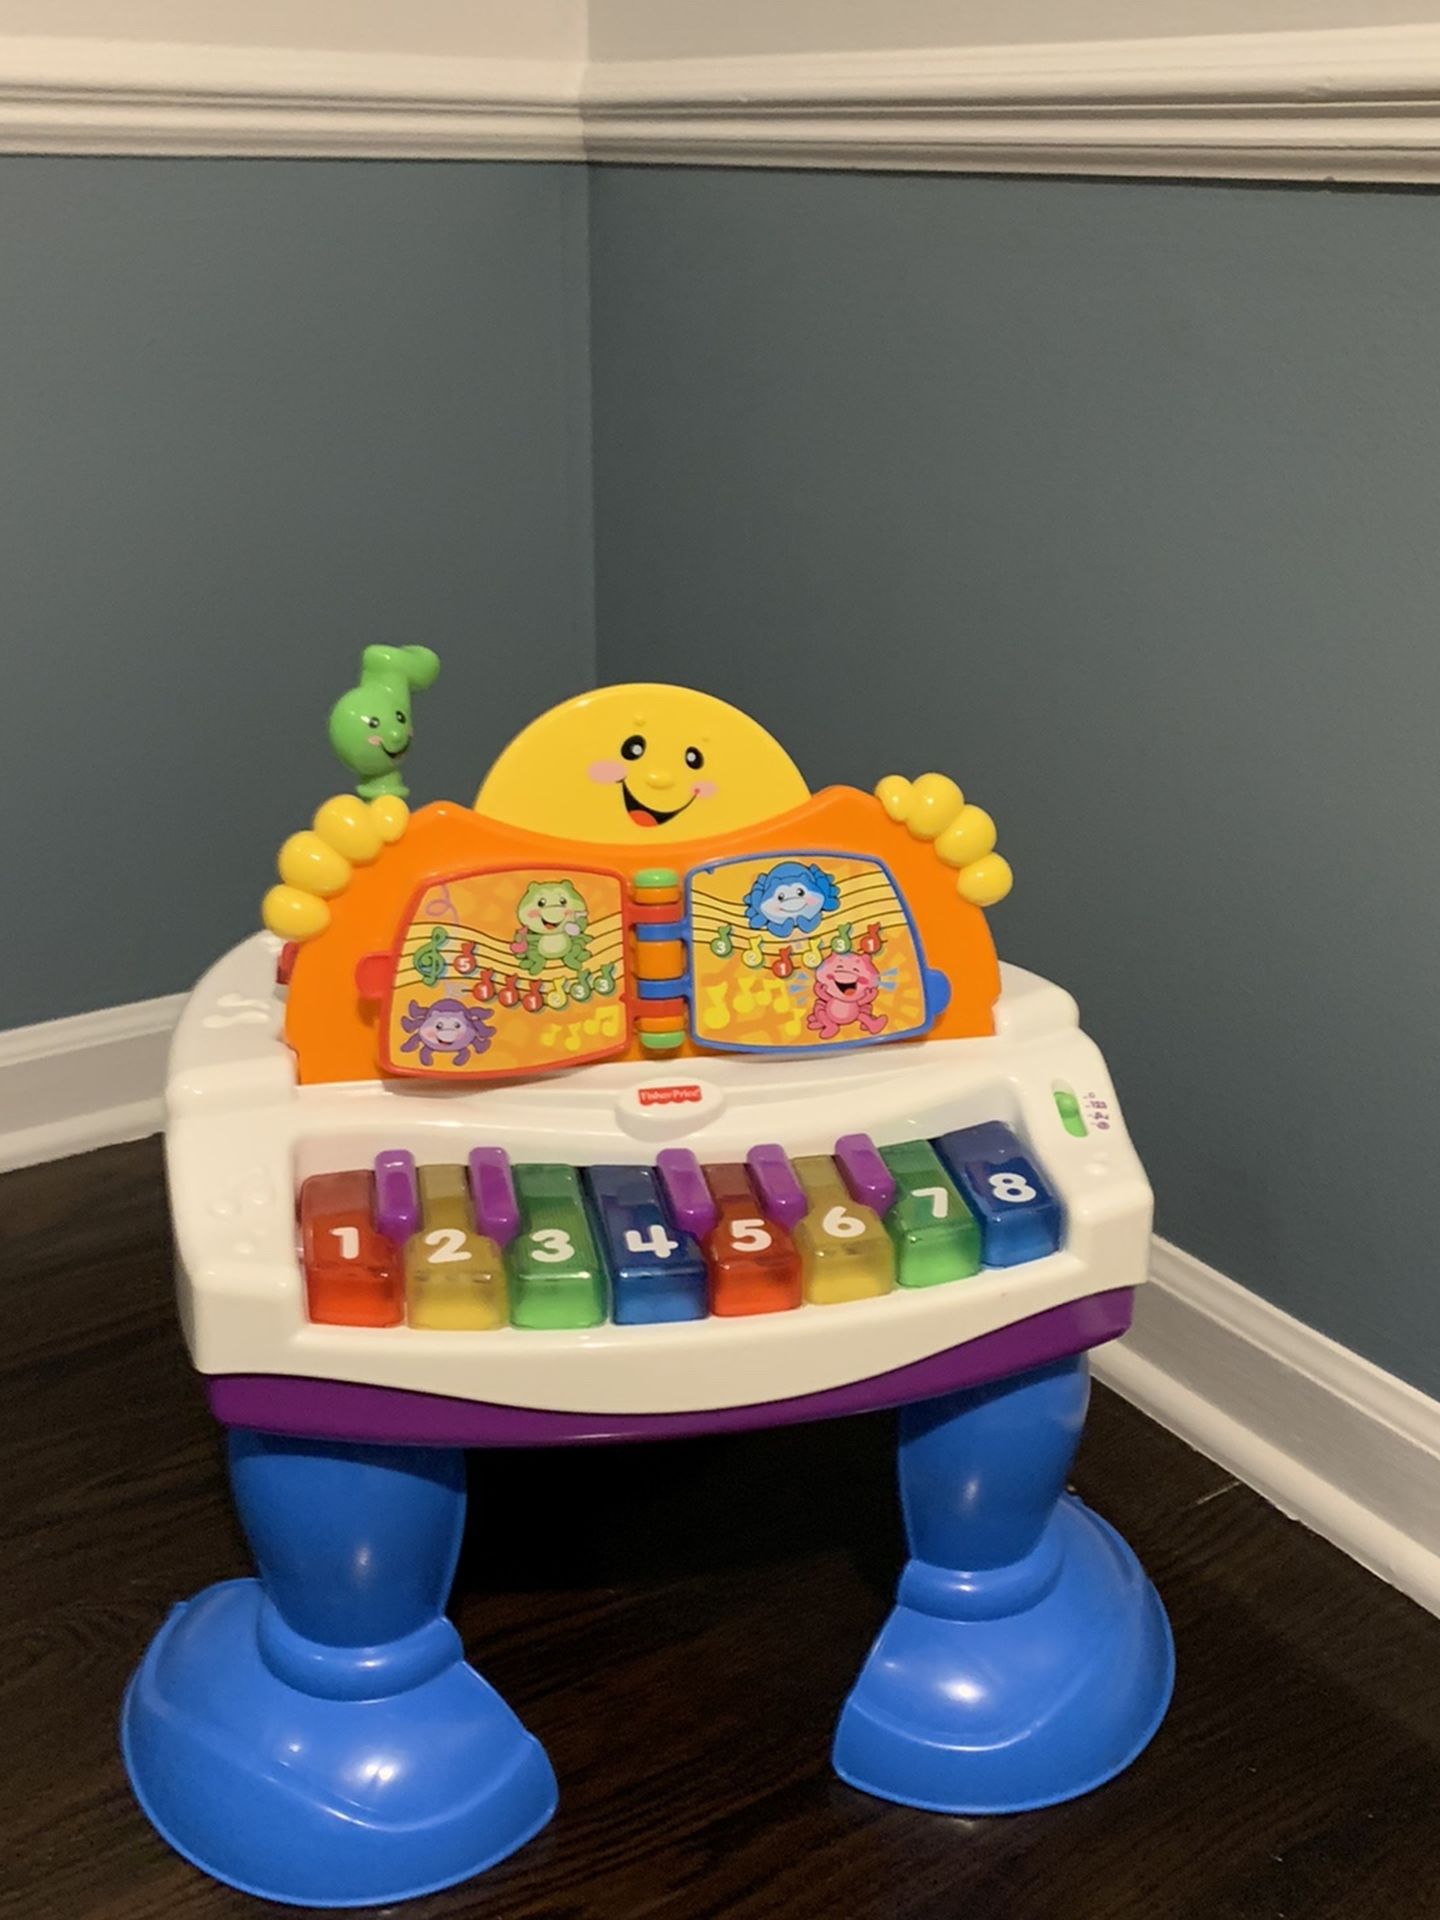 Fisherprice Toddler Piano Toy